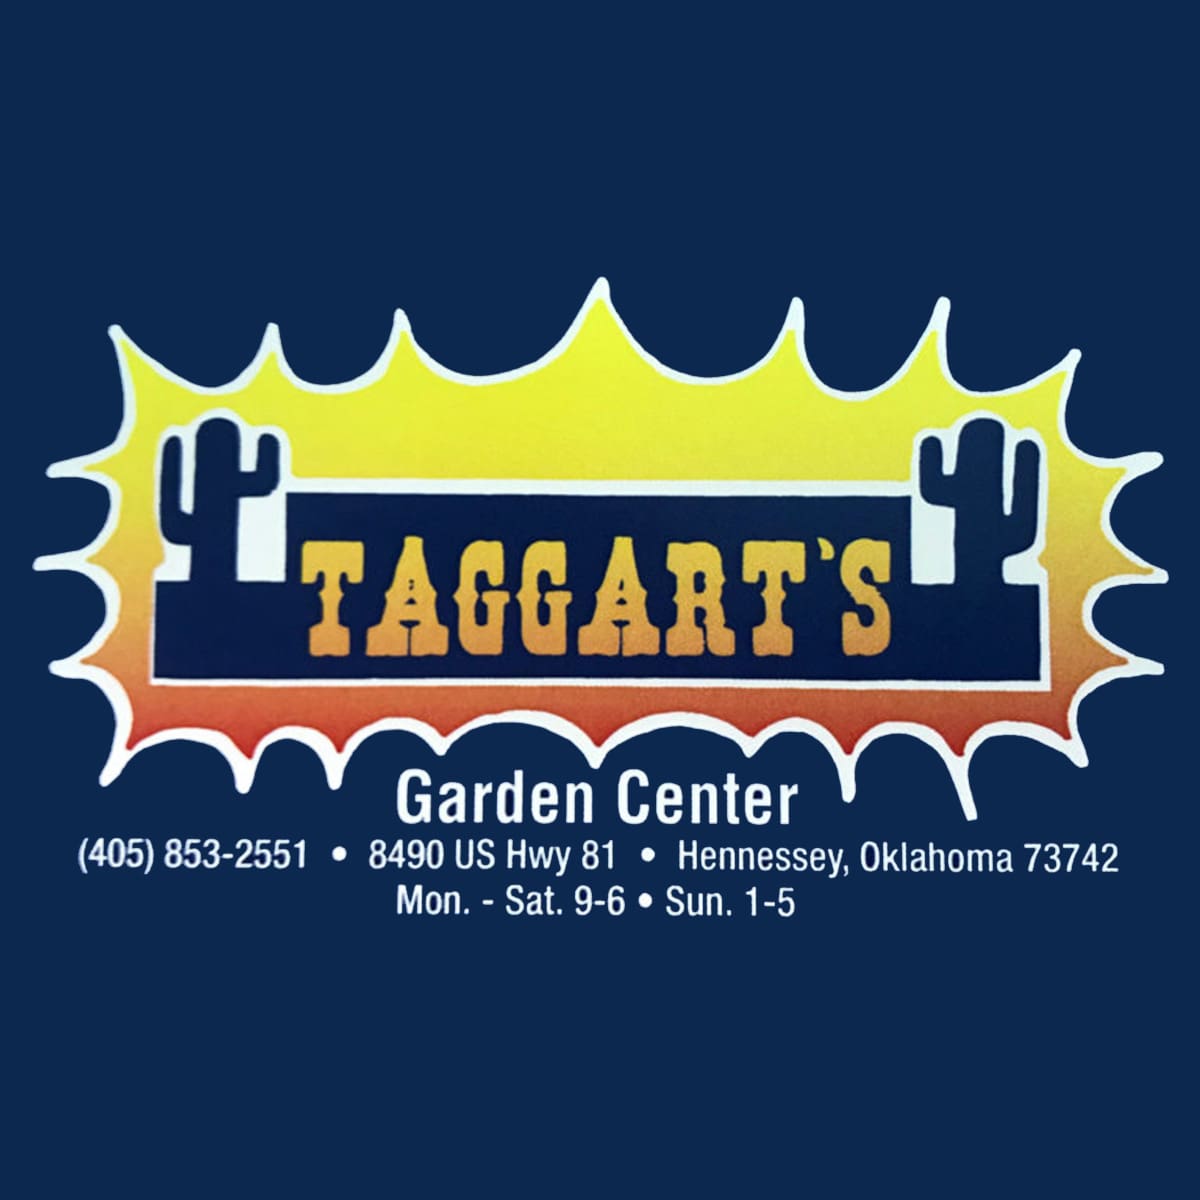 Taggart’s Garden Center